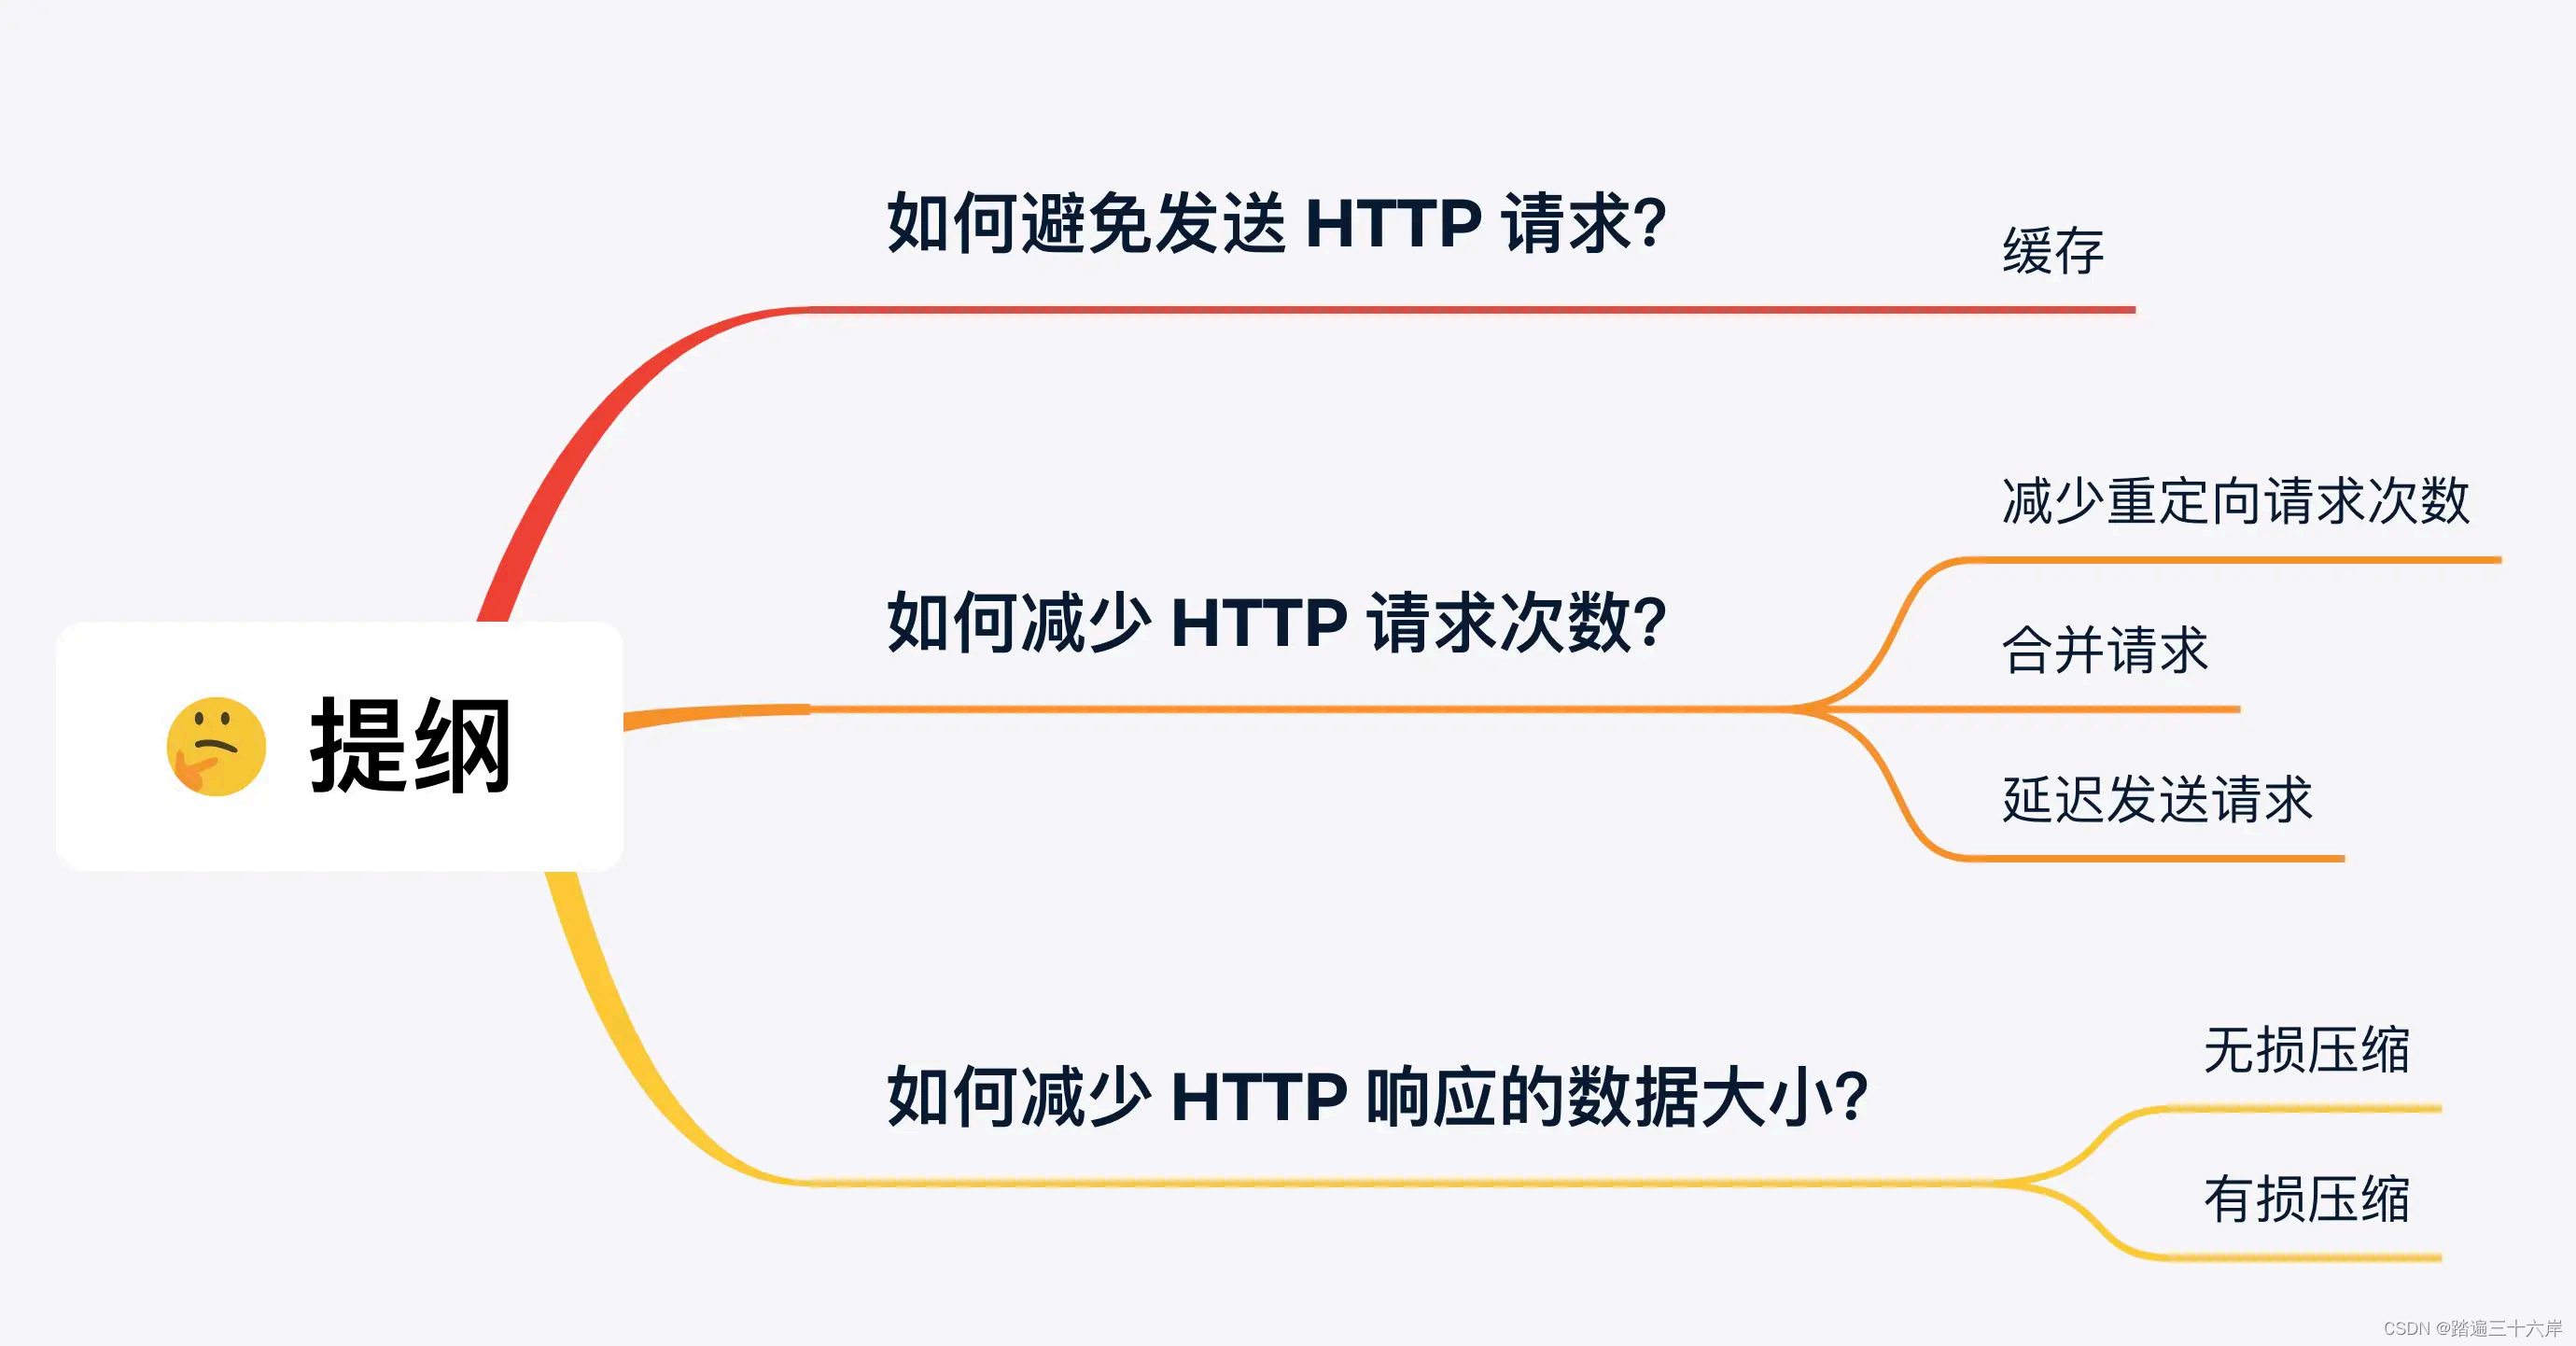 HTTP/1.1 如何优化?